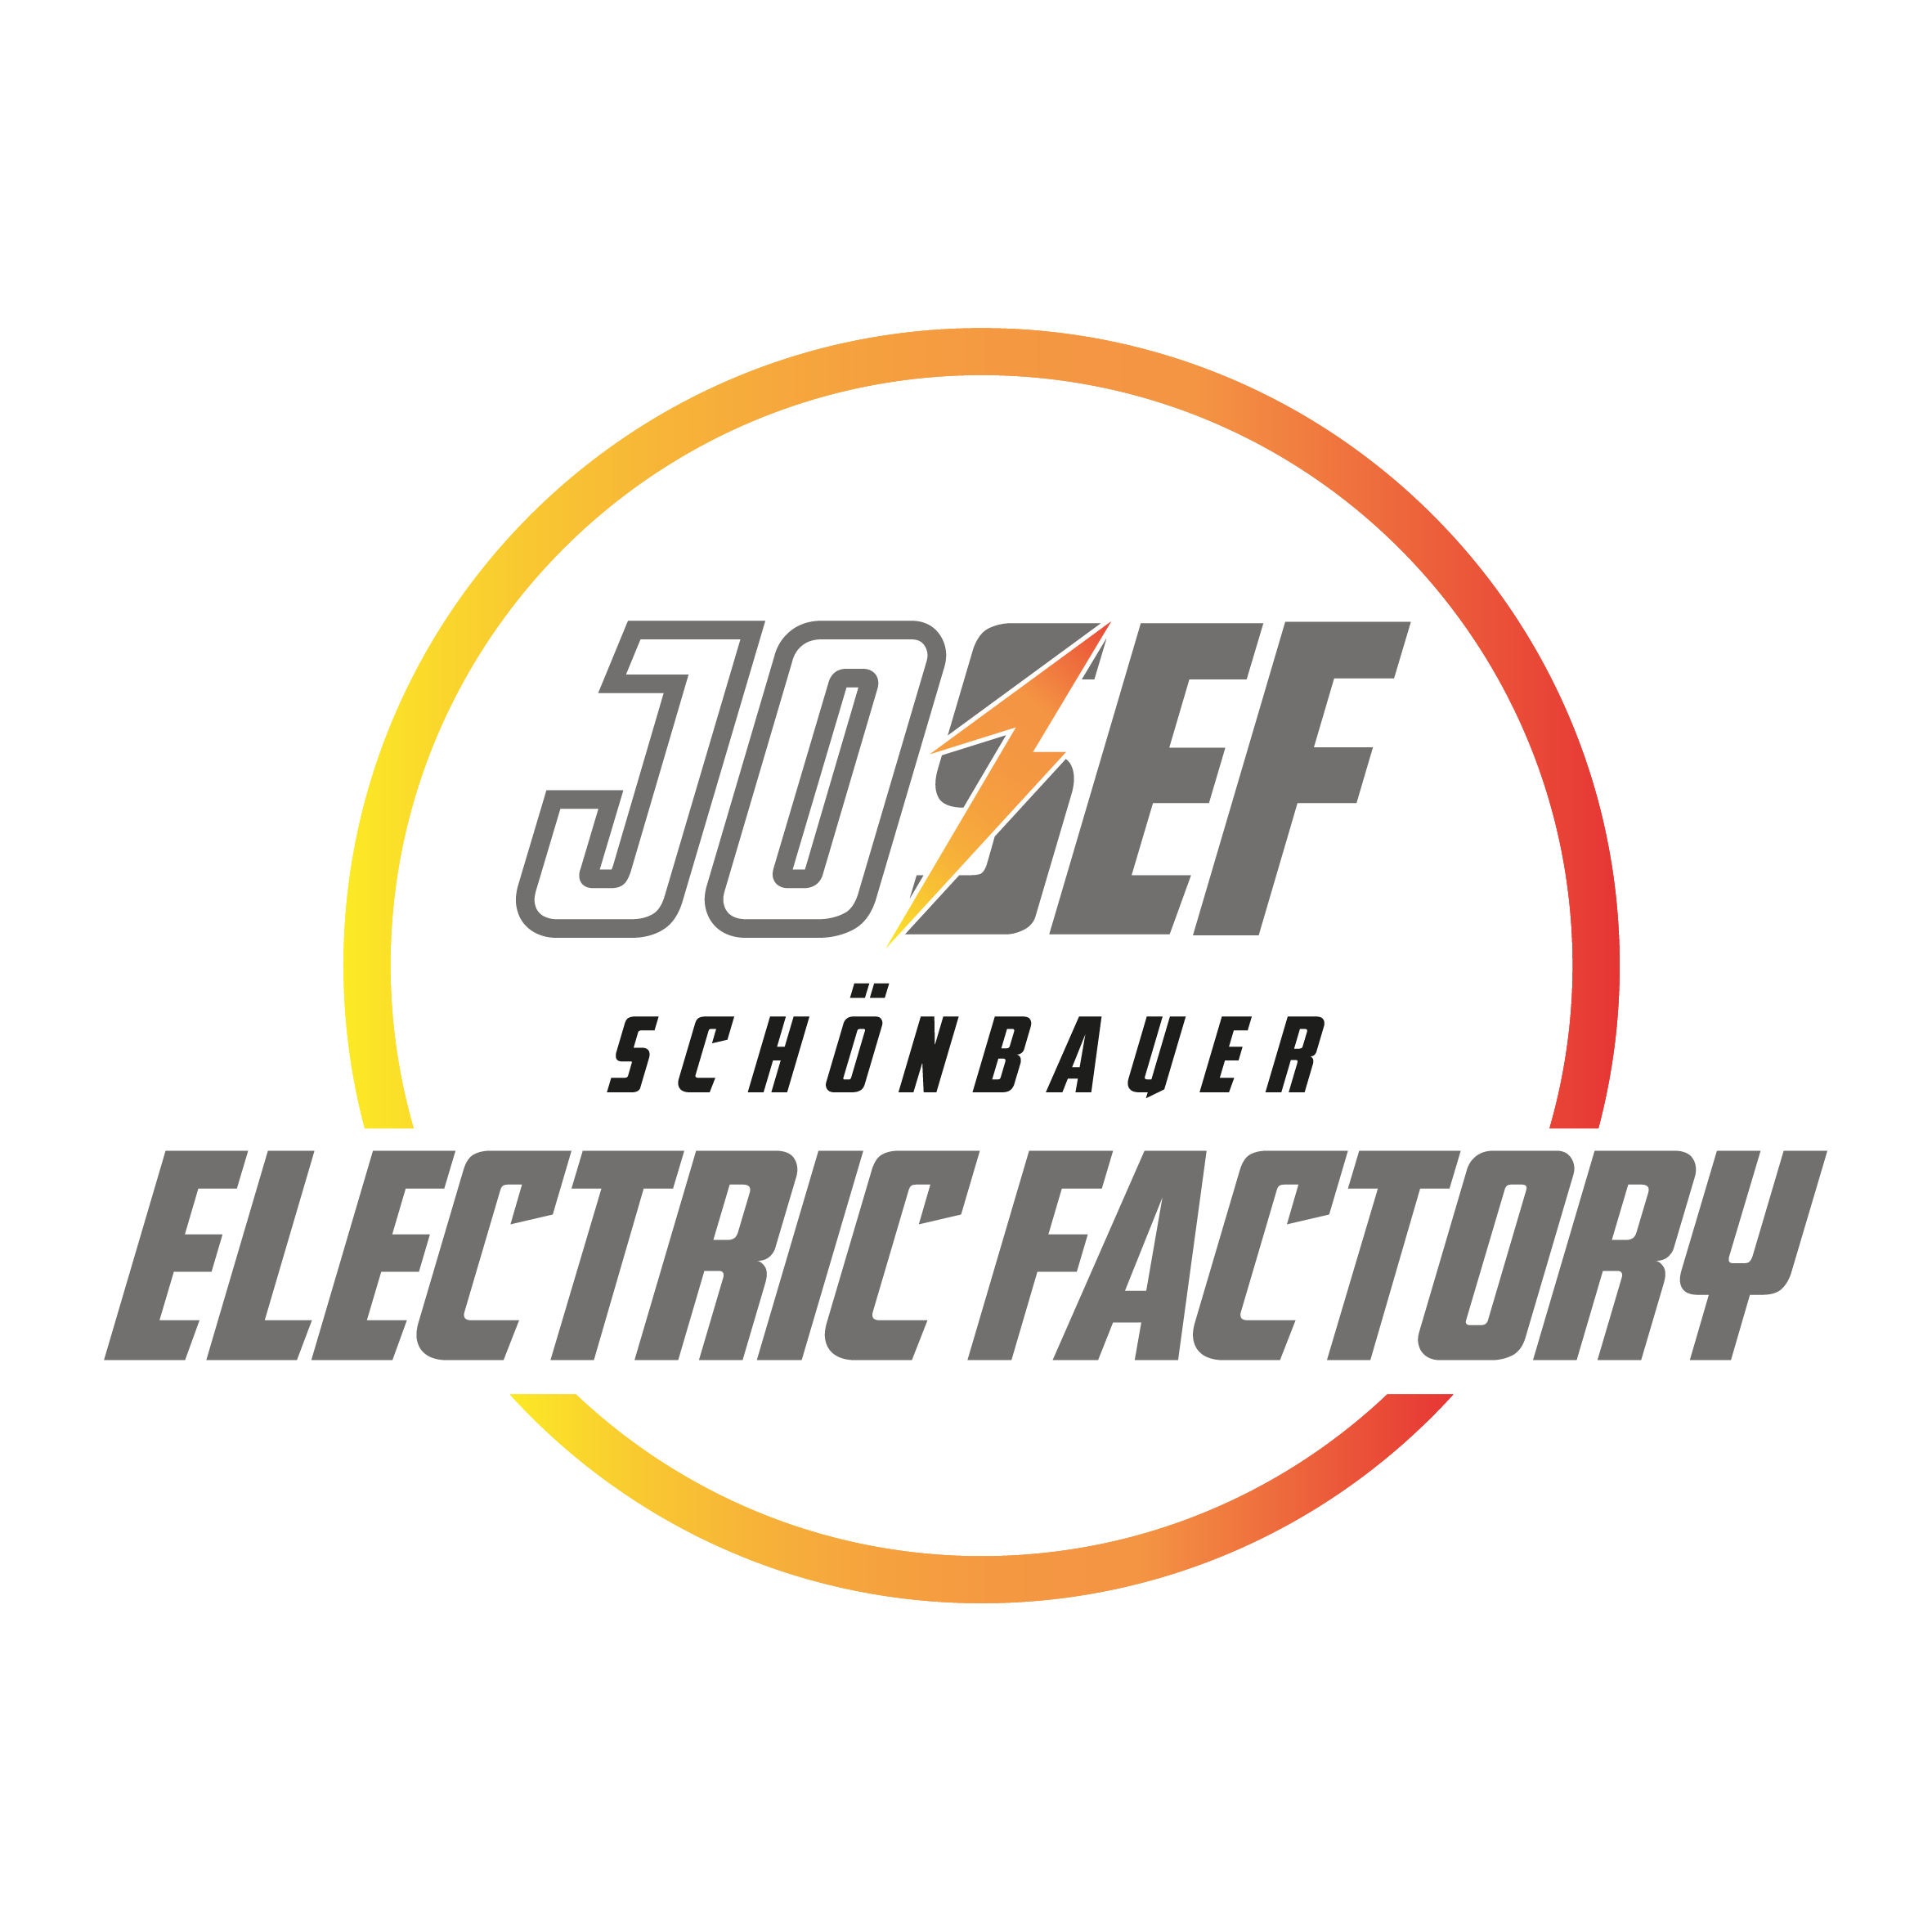 Electric Factory Josef Schönbauer